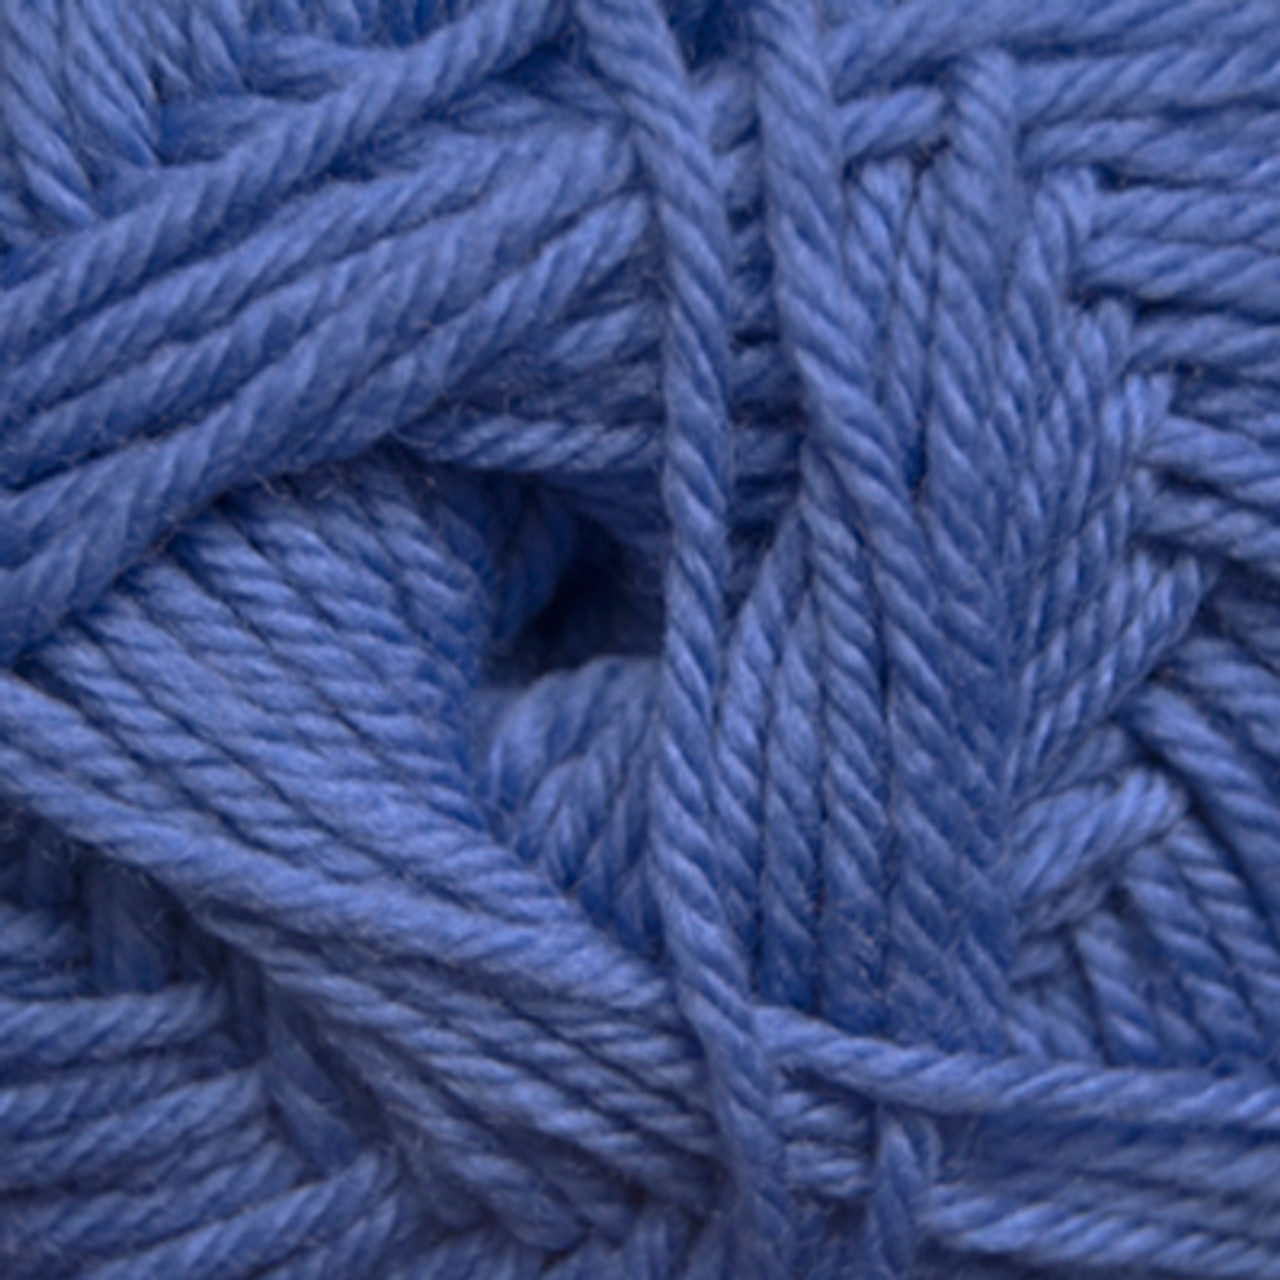 Medium Blue 220 Superwash Merino Wool Yarn (3 - Light) by Cascade